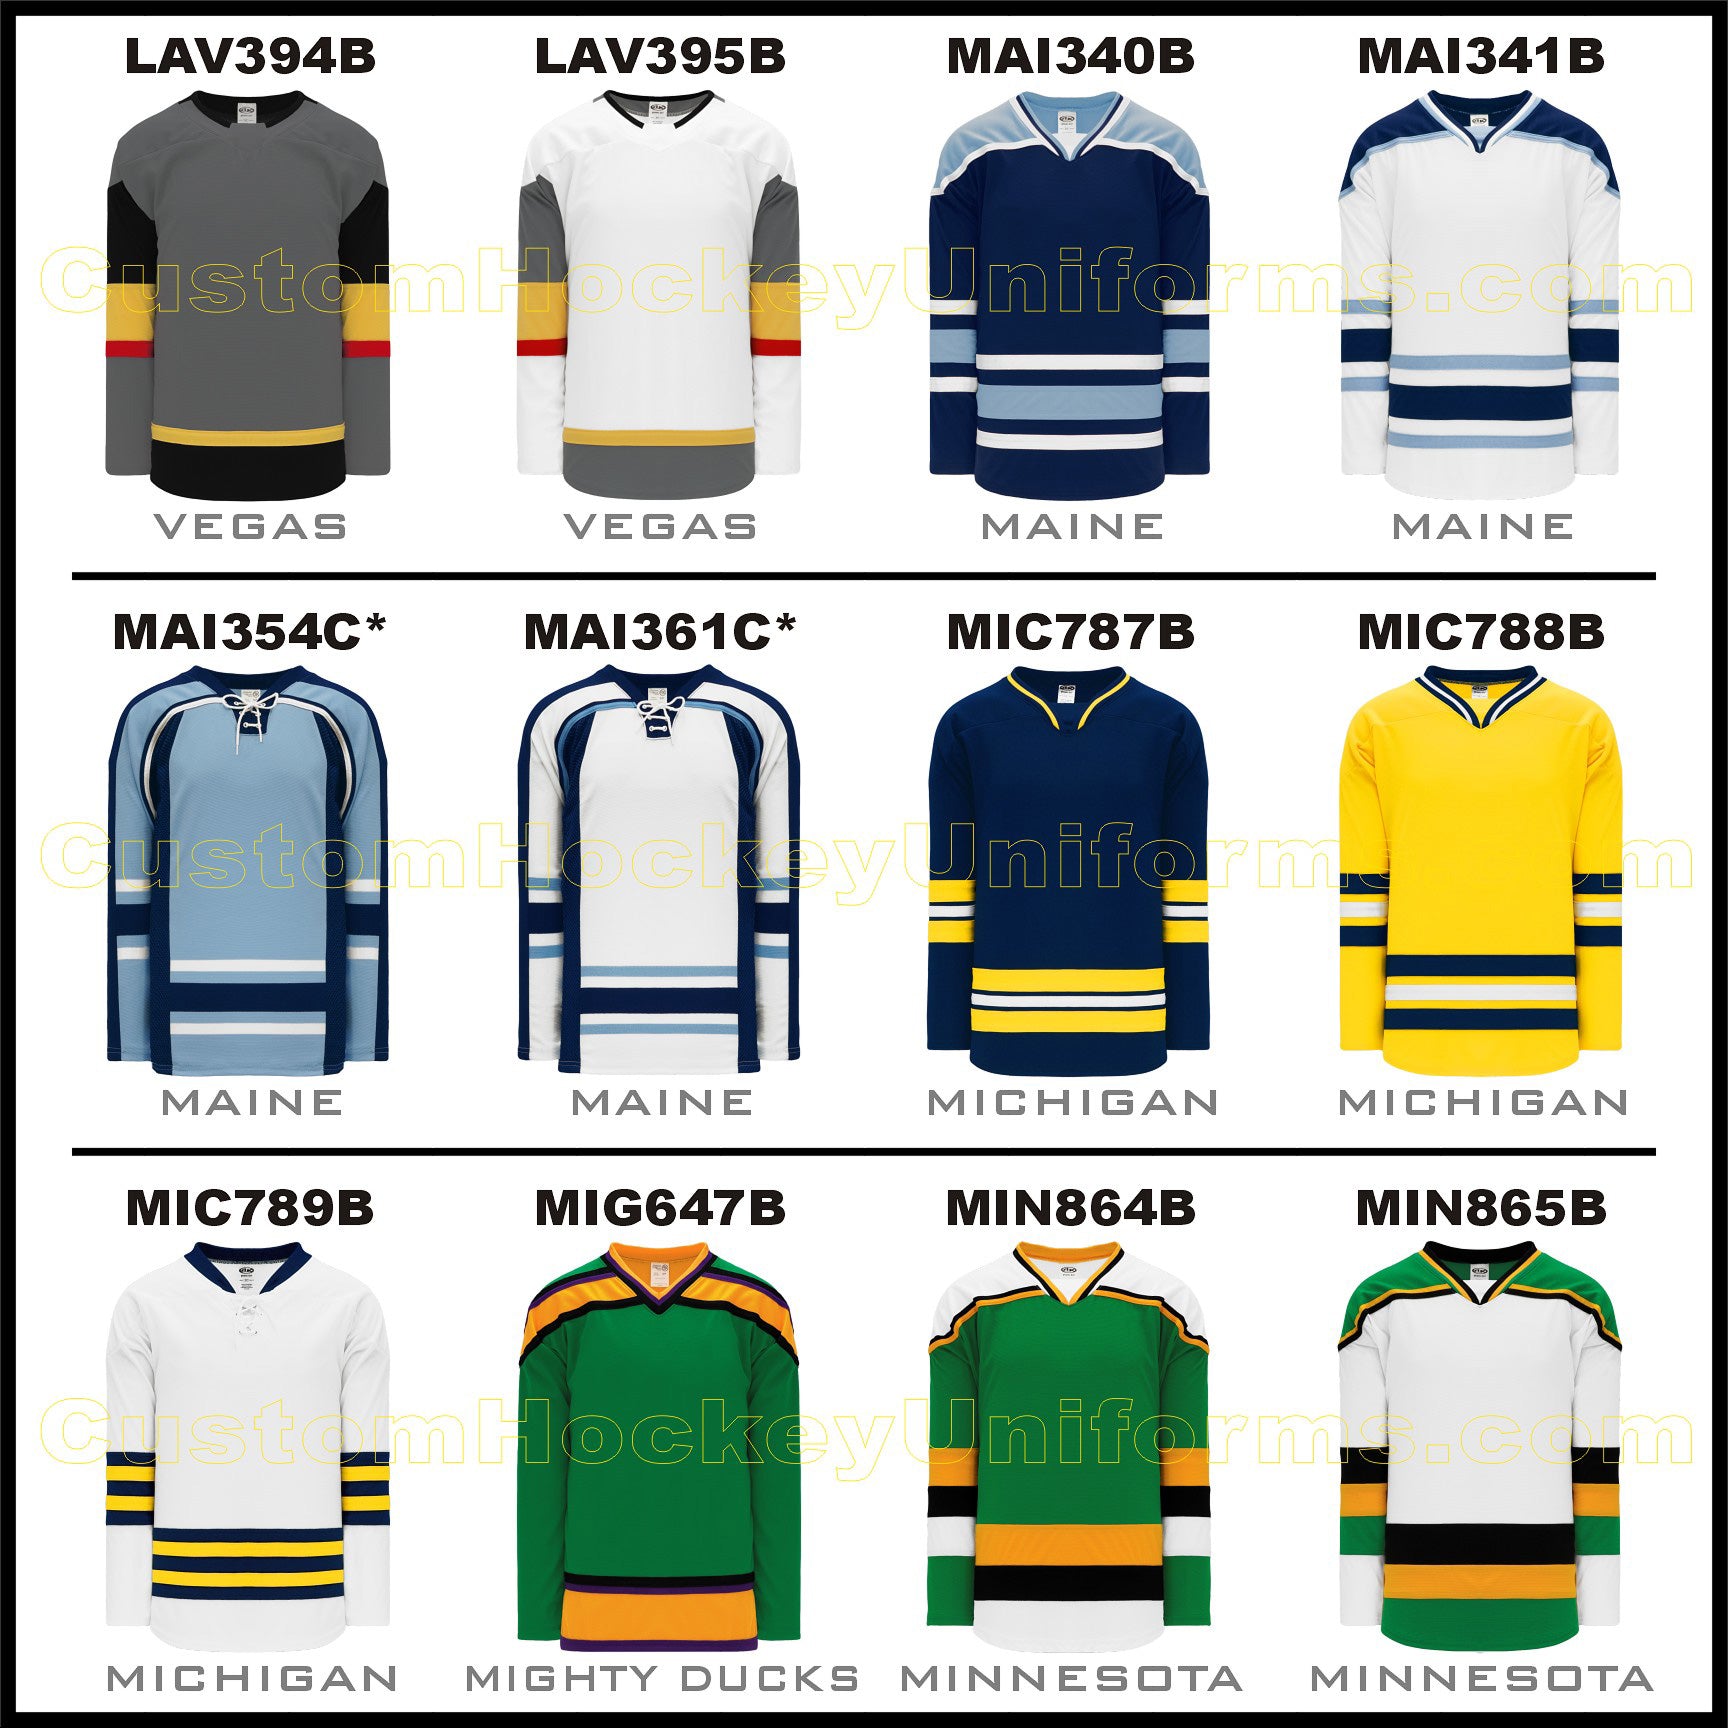 H550B-MIC787B University of Michigan Blank Hockey Jerseys